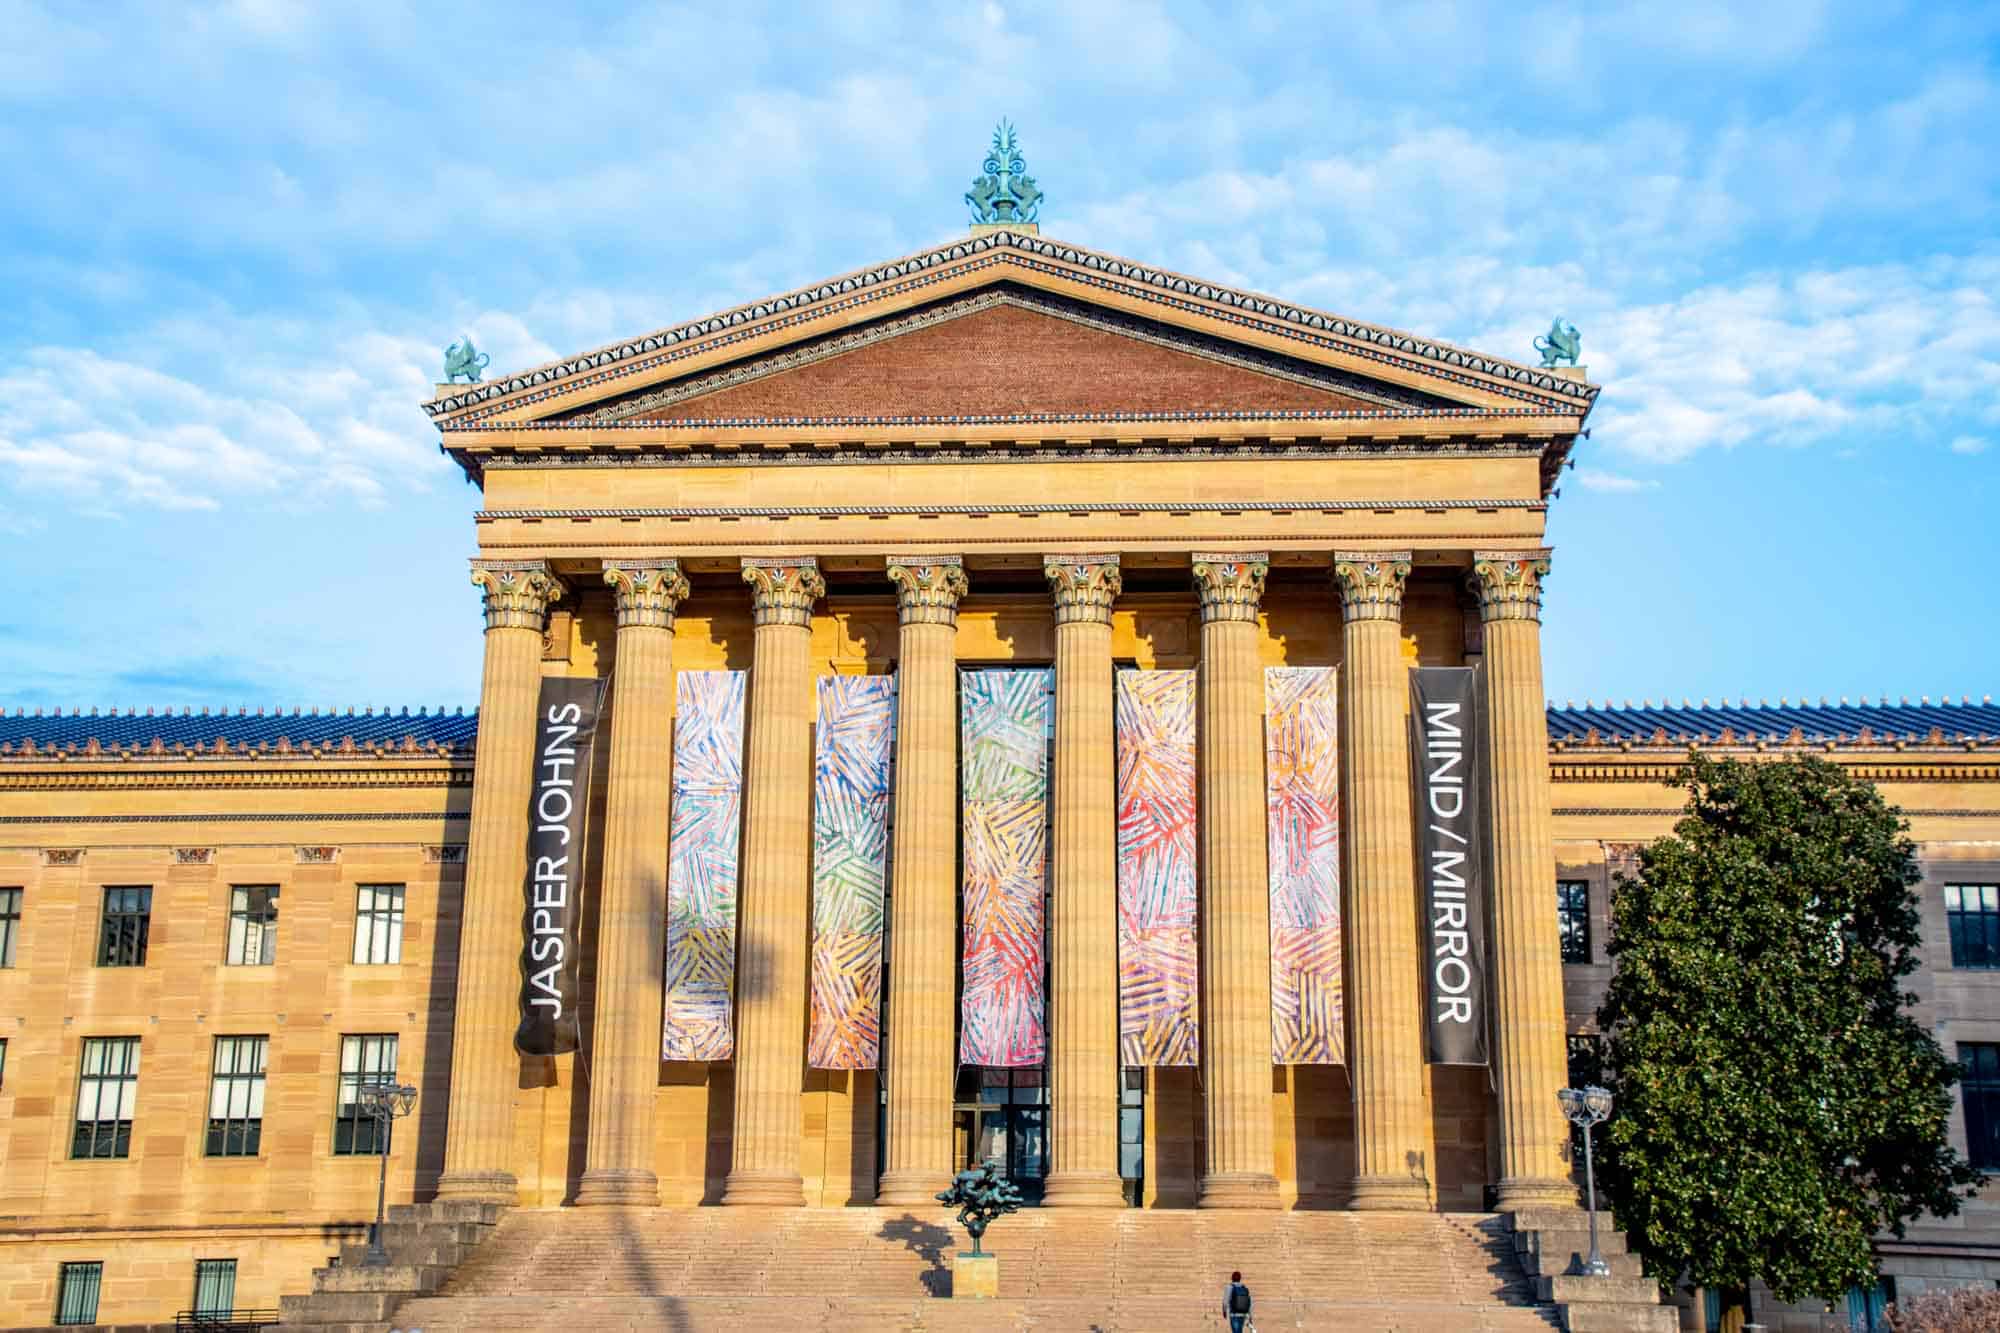 Exterior of the Philadelphia Museum of Art